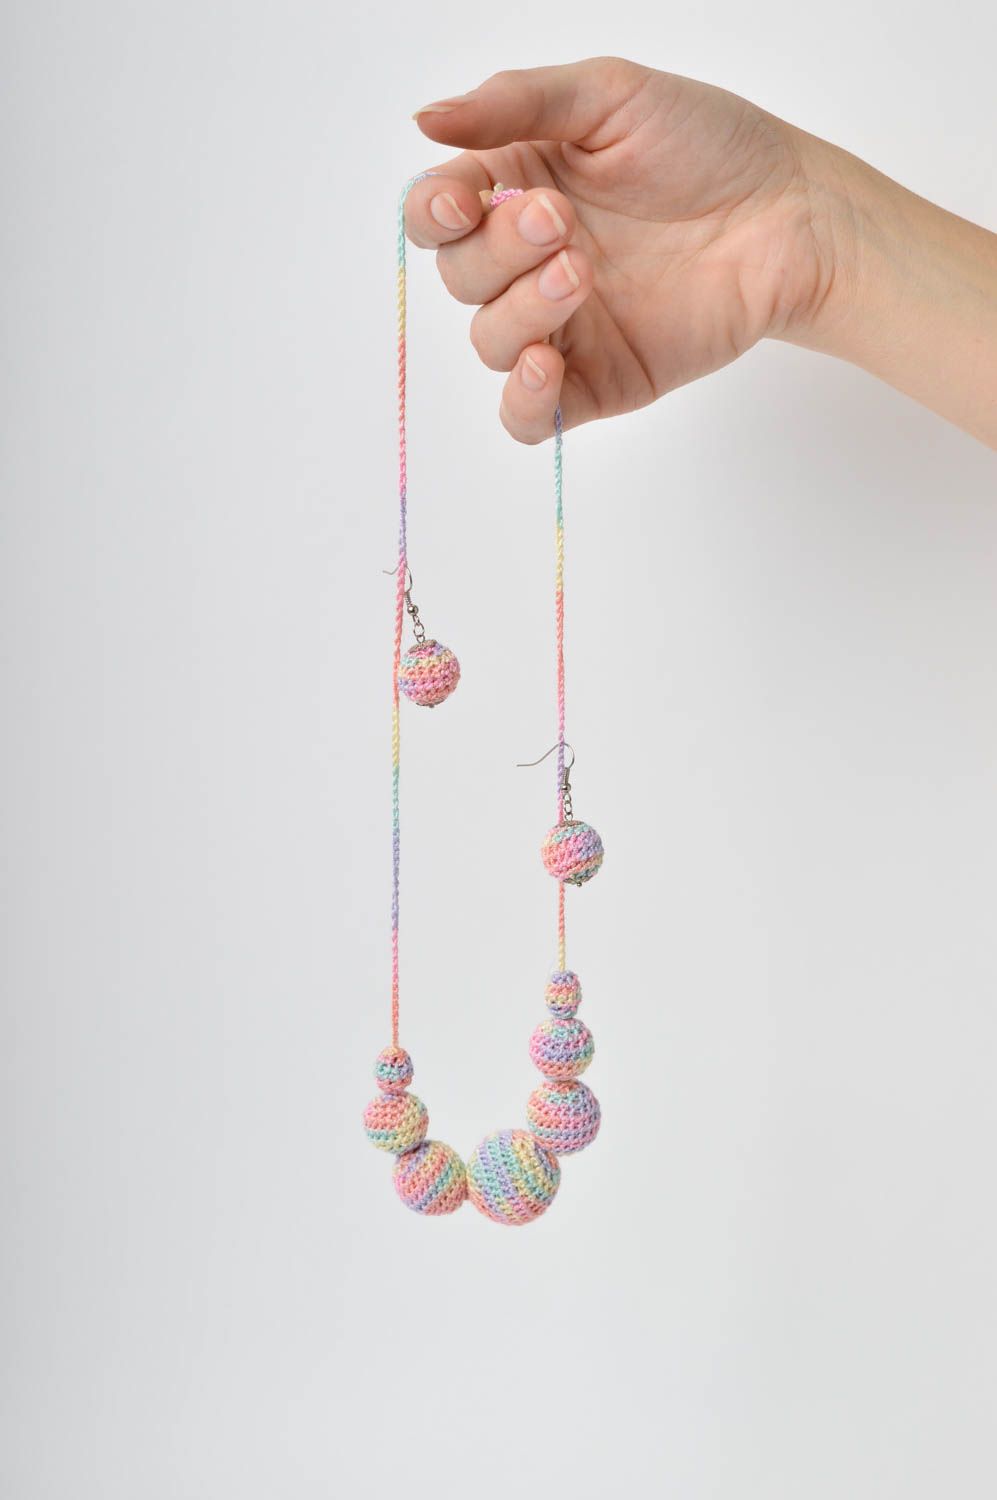 Handmade crochet earrings crochet ball necklace costume jewelry designs photo 5